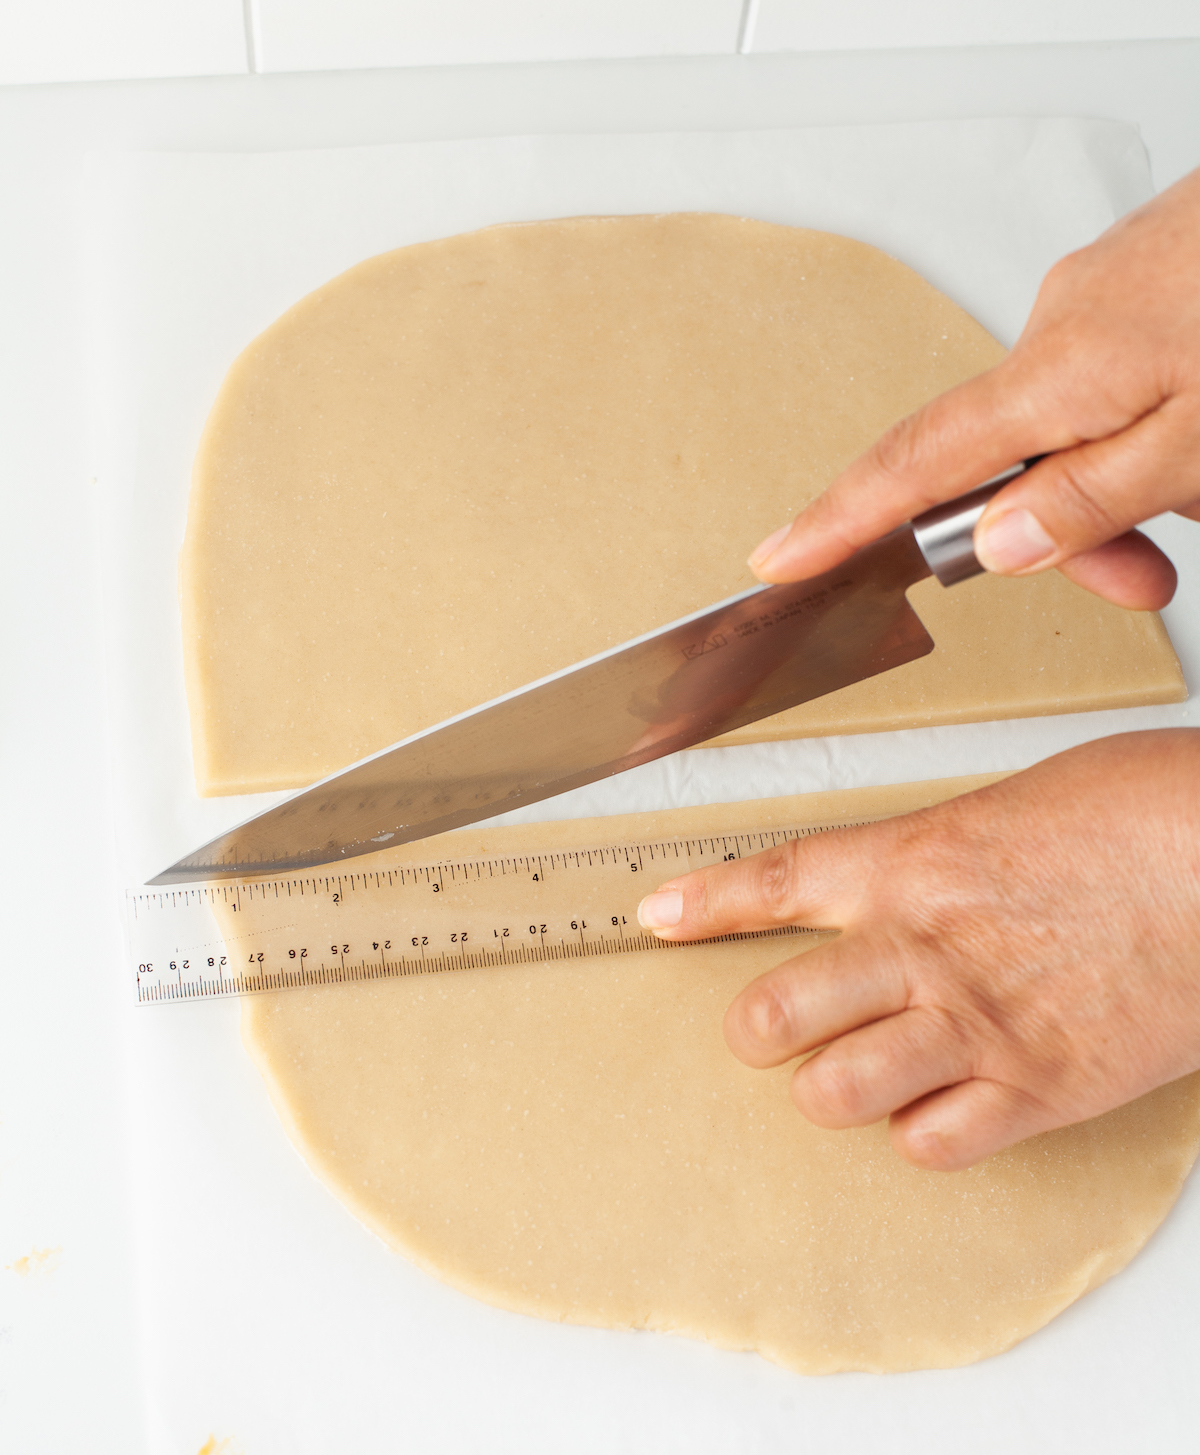 Cut the dough lattice using a knife and ruler